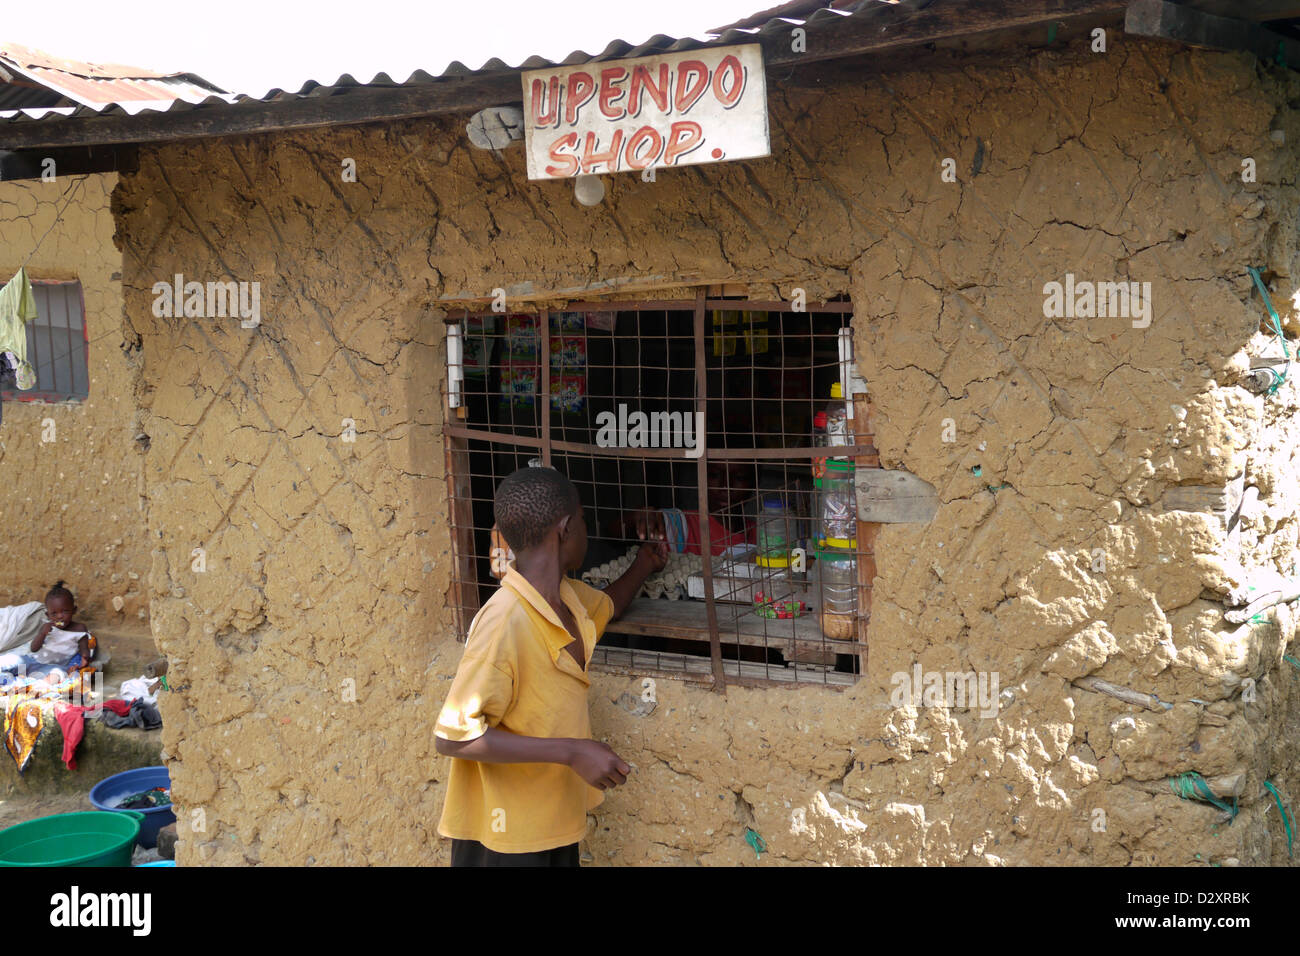 kenya scenes slum bangladesh small shop mombasa 20111001 africa sub-saharan poverty trade economy 2011 Stock Photo